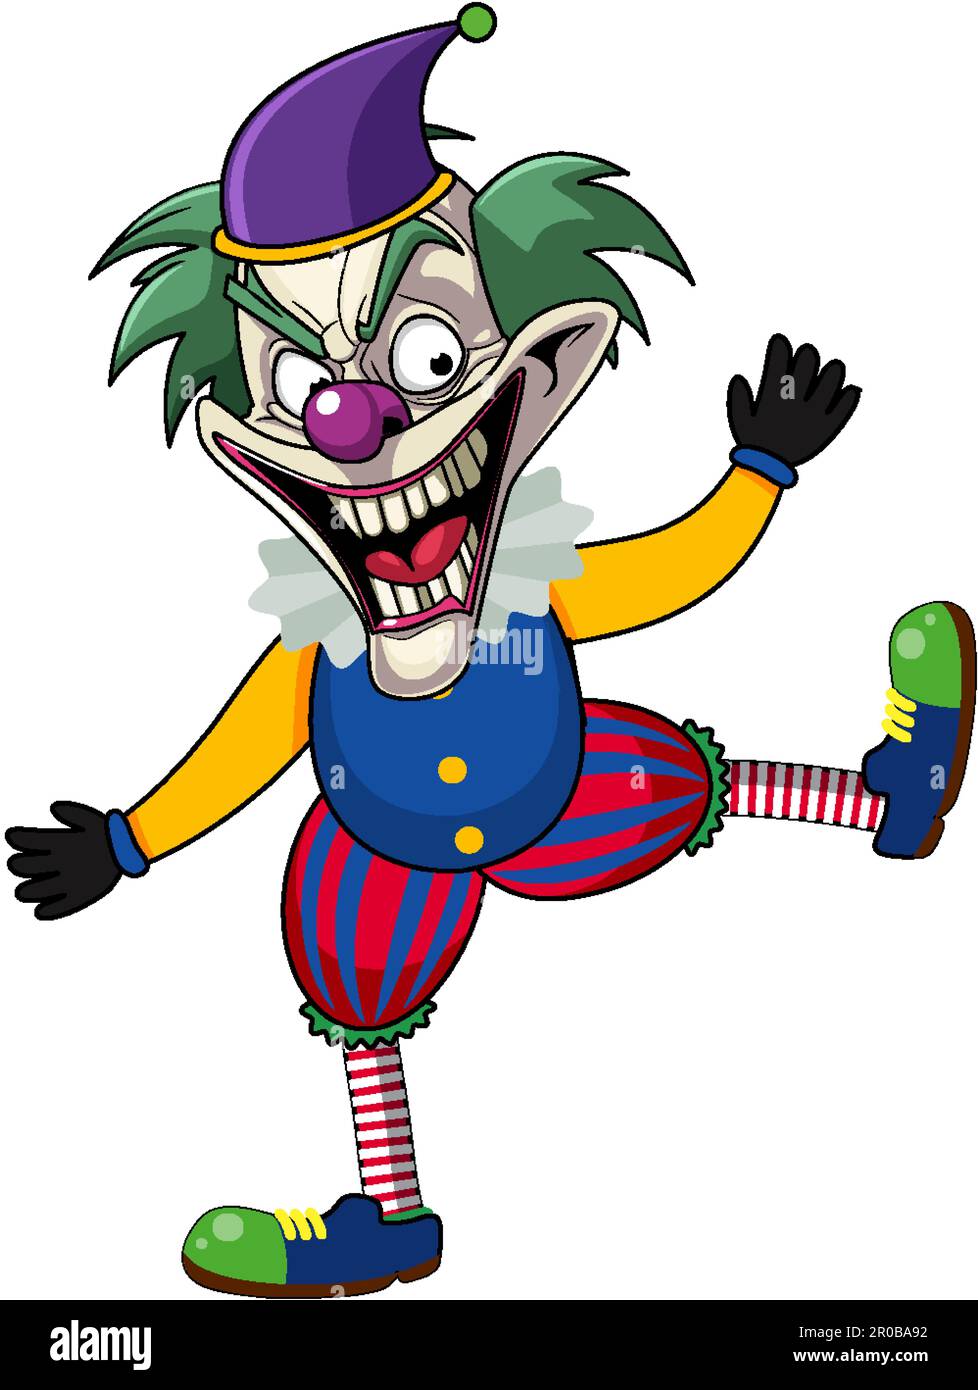 Creepy joker cartoon character illustration Stock Vector Image & Art ...